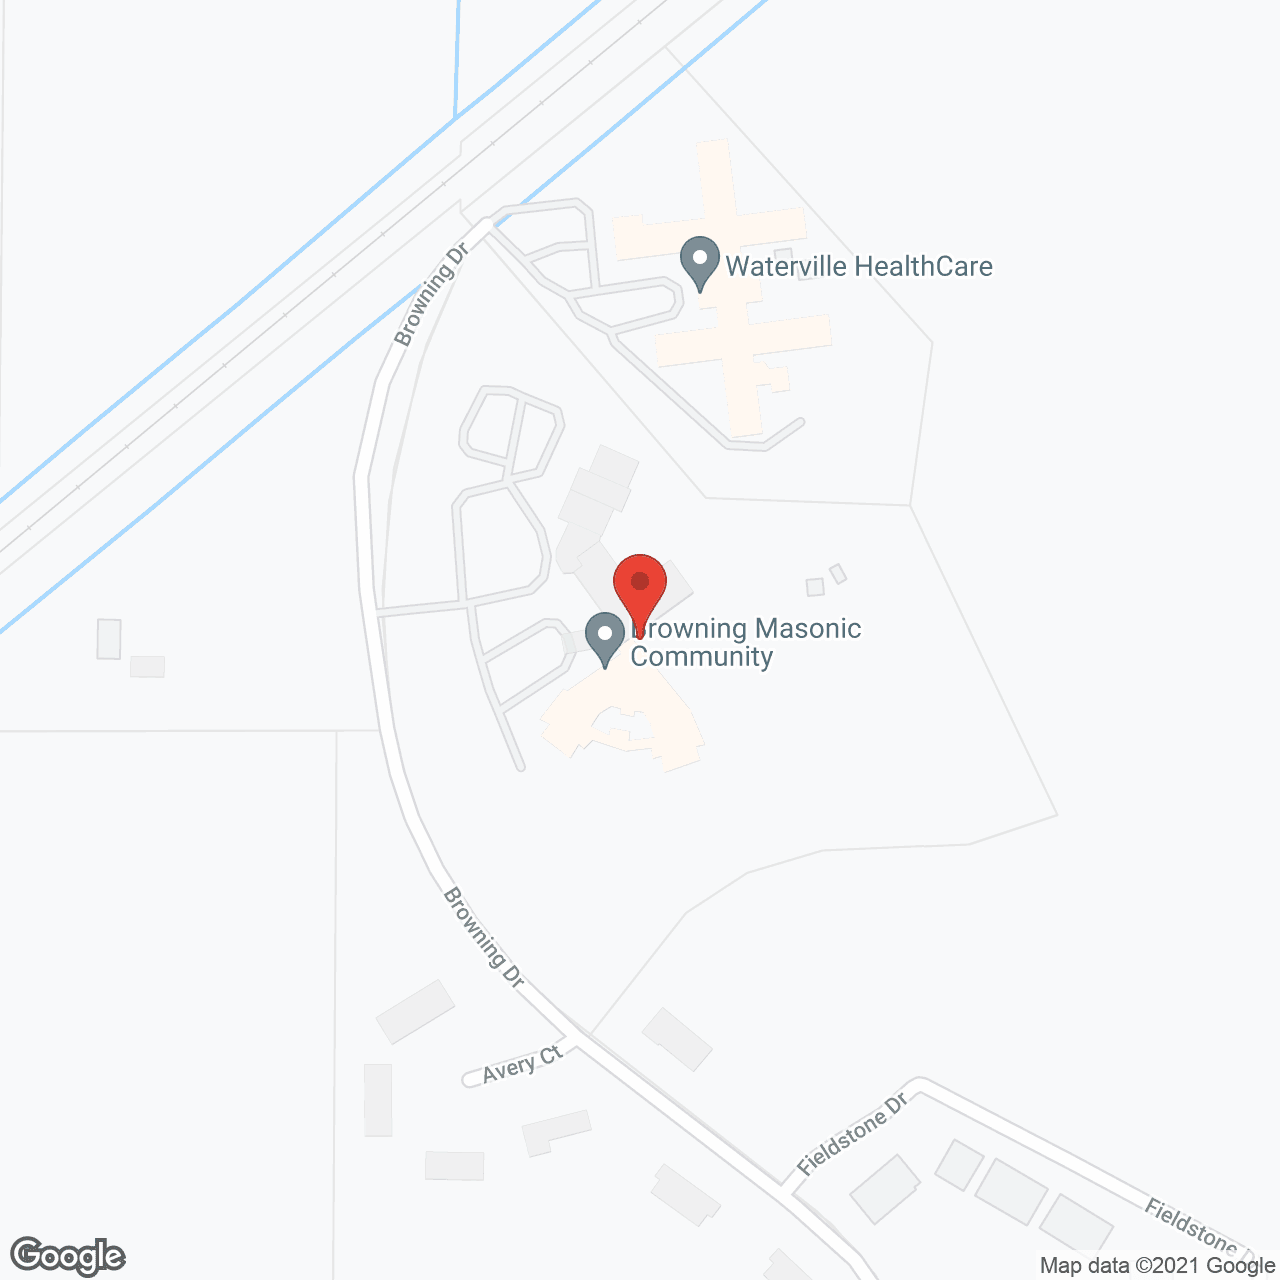 Browning Masonic Community in google map